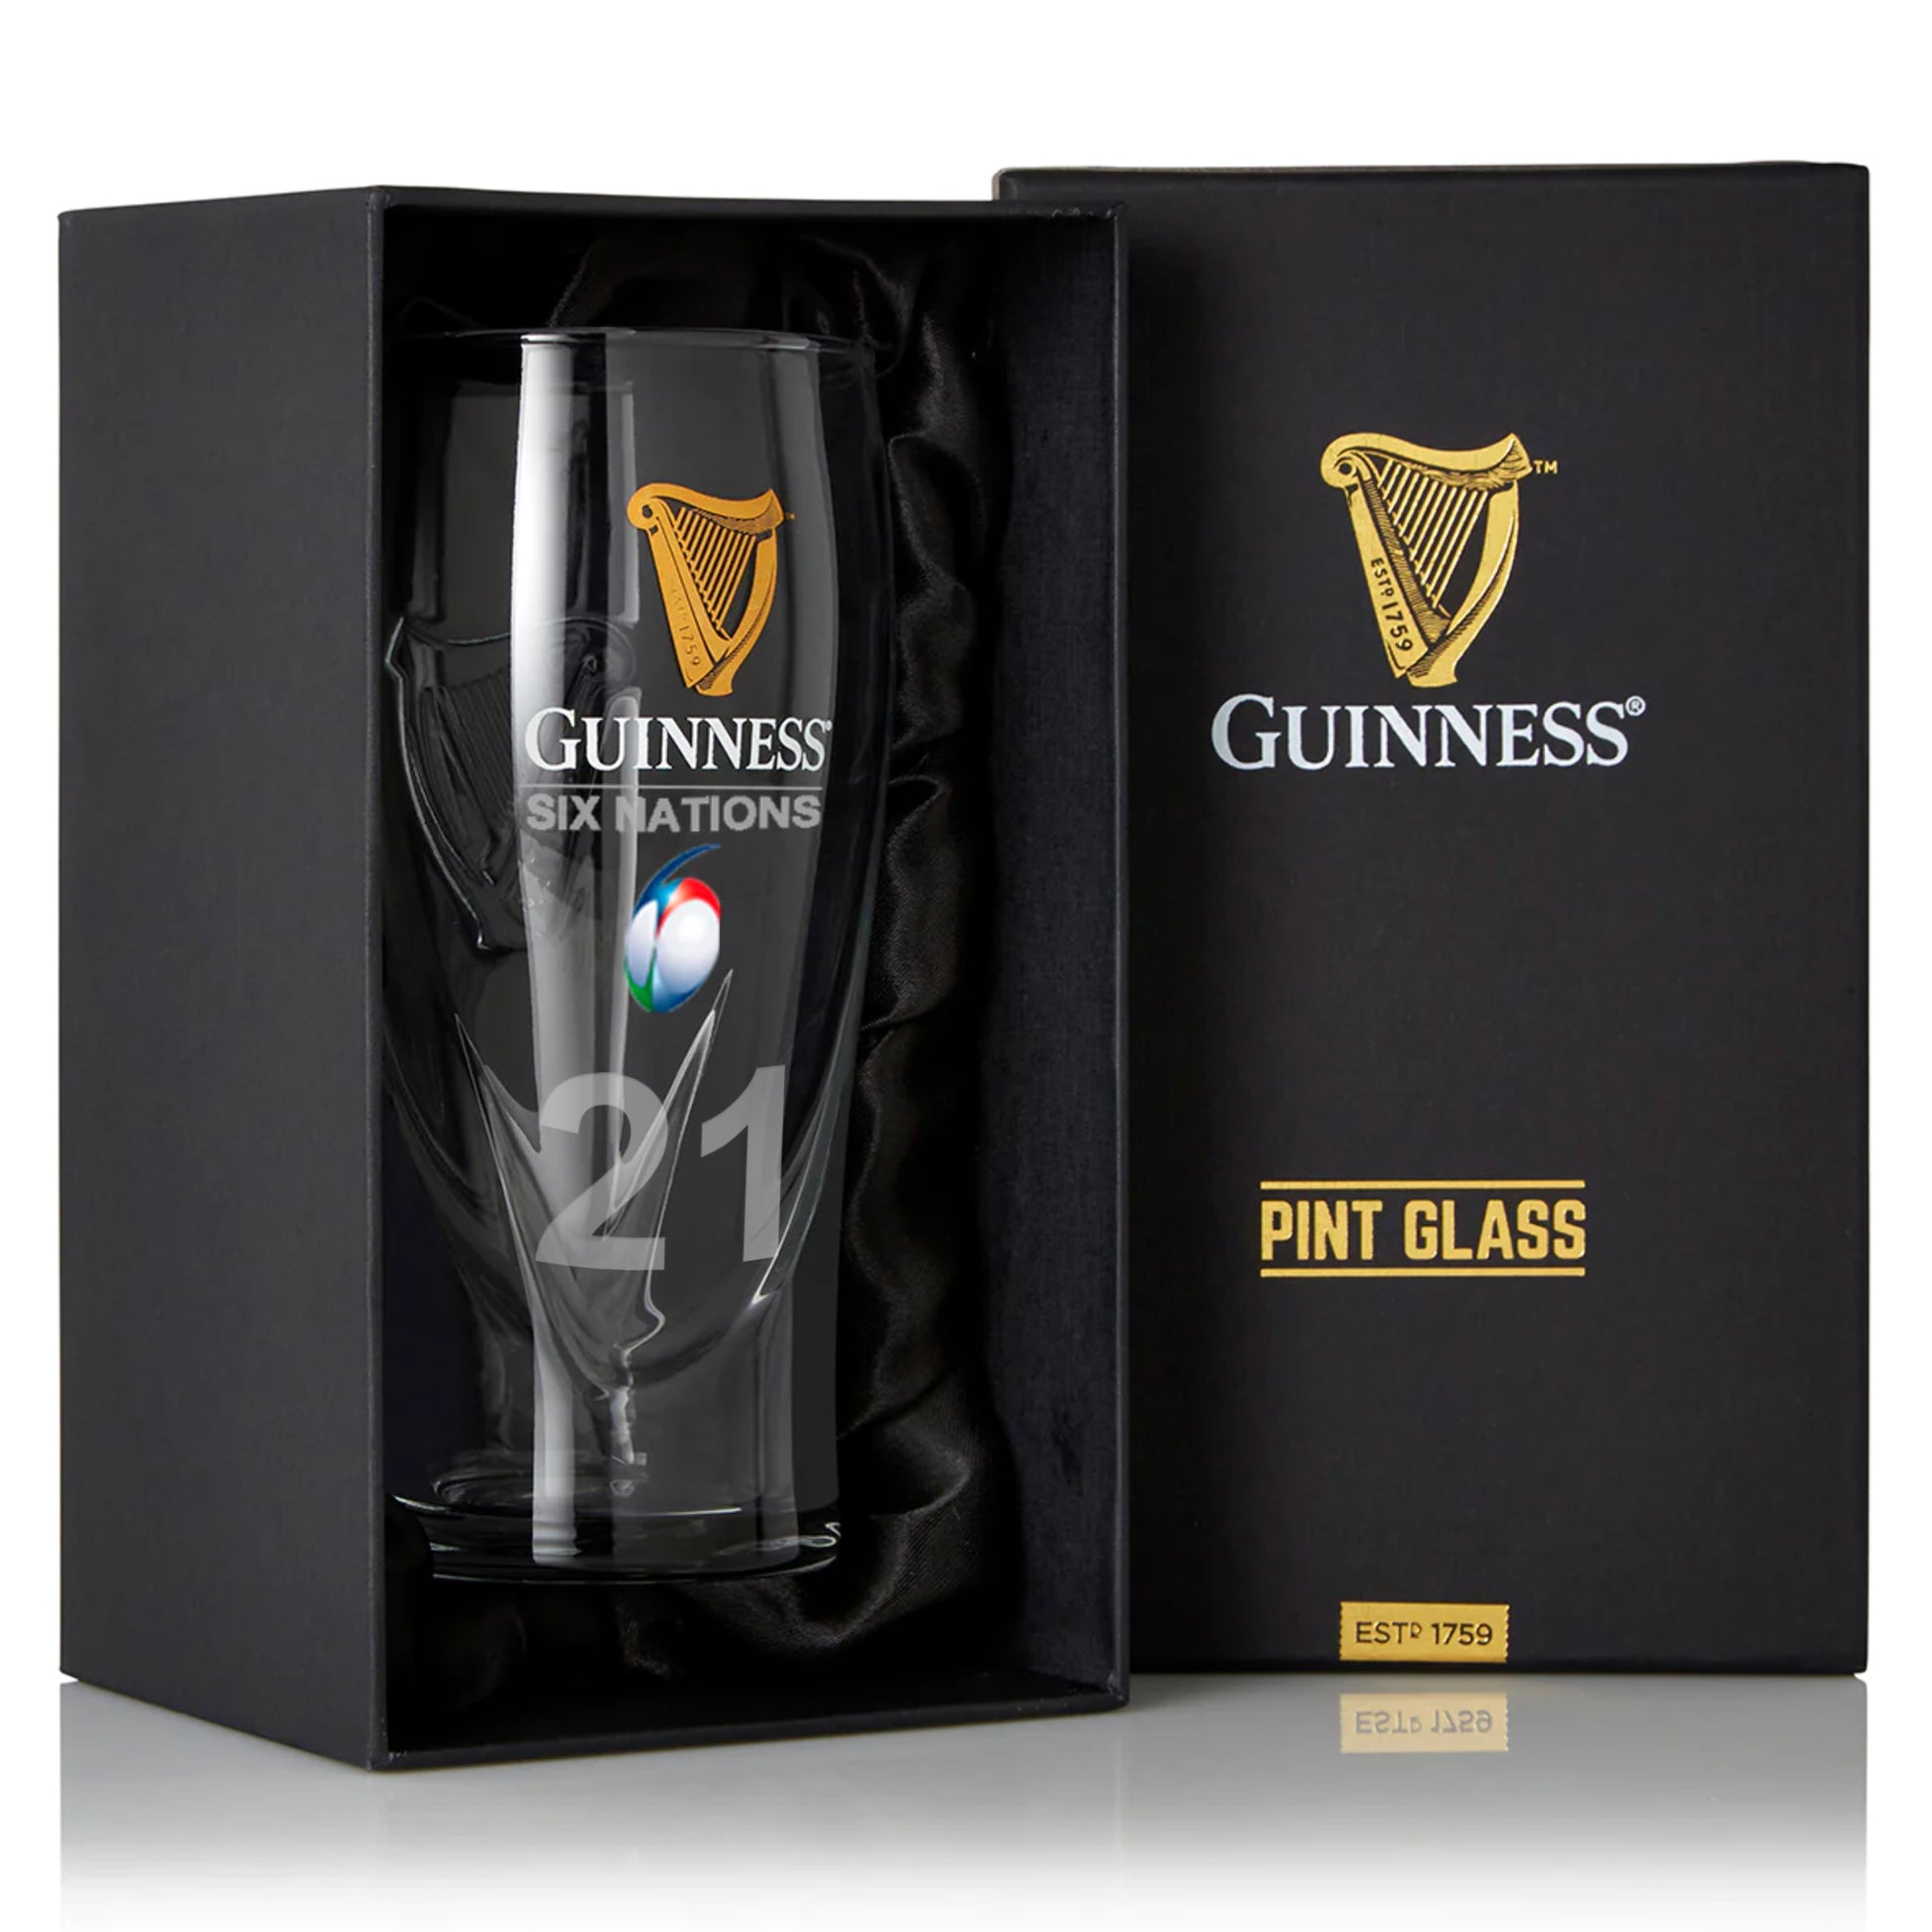 Guinness Six Nations Pint Glass